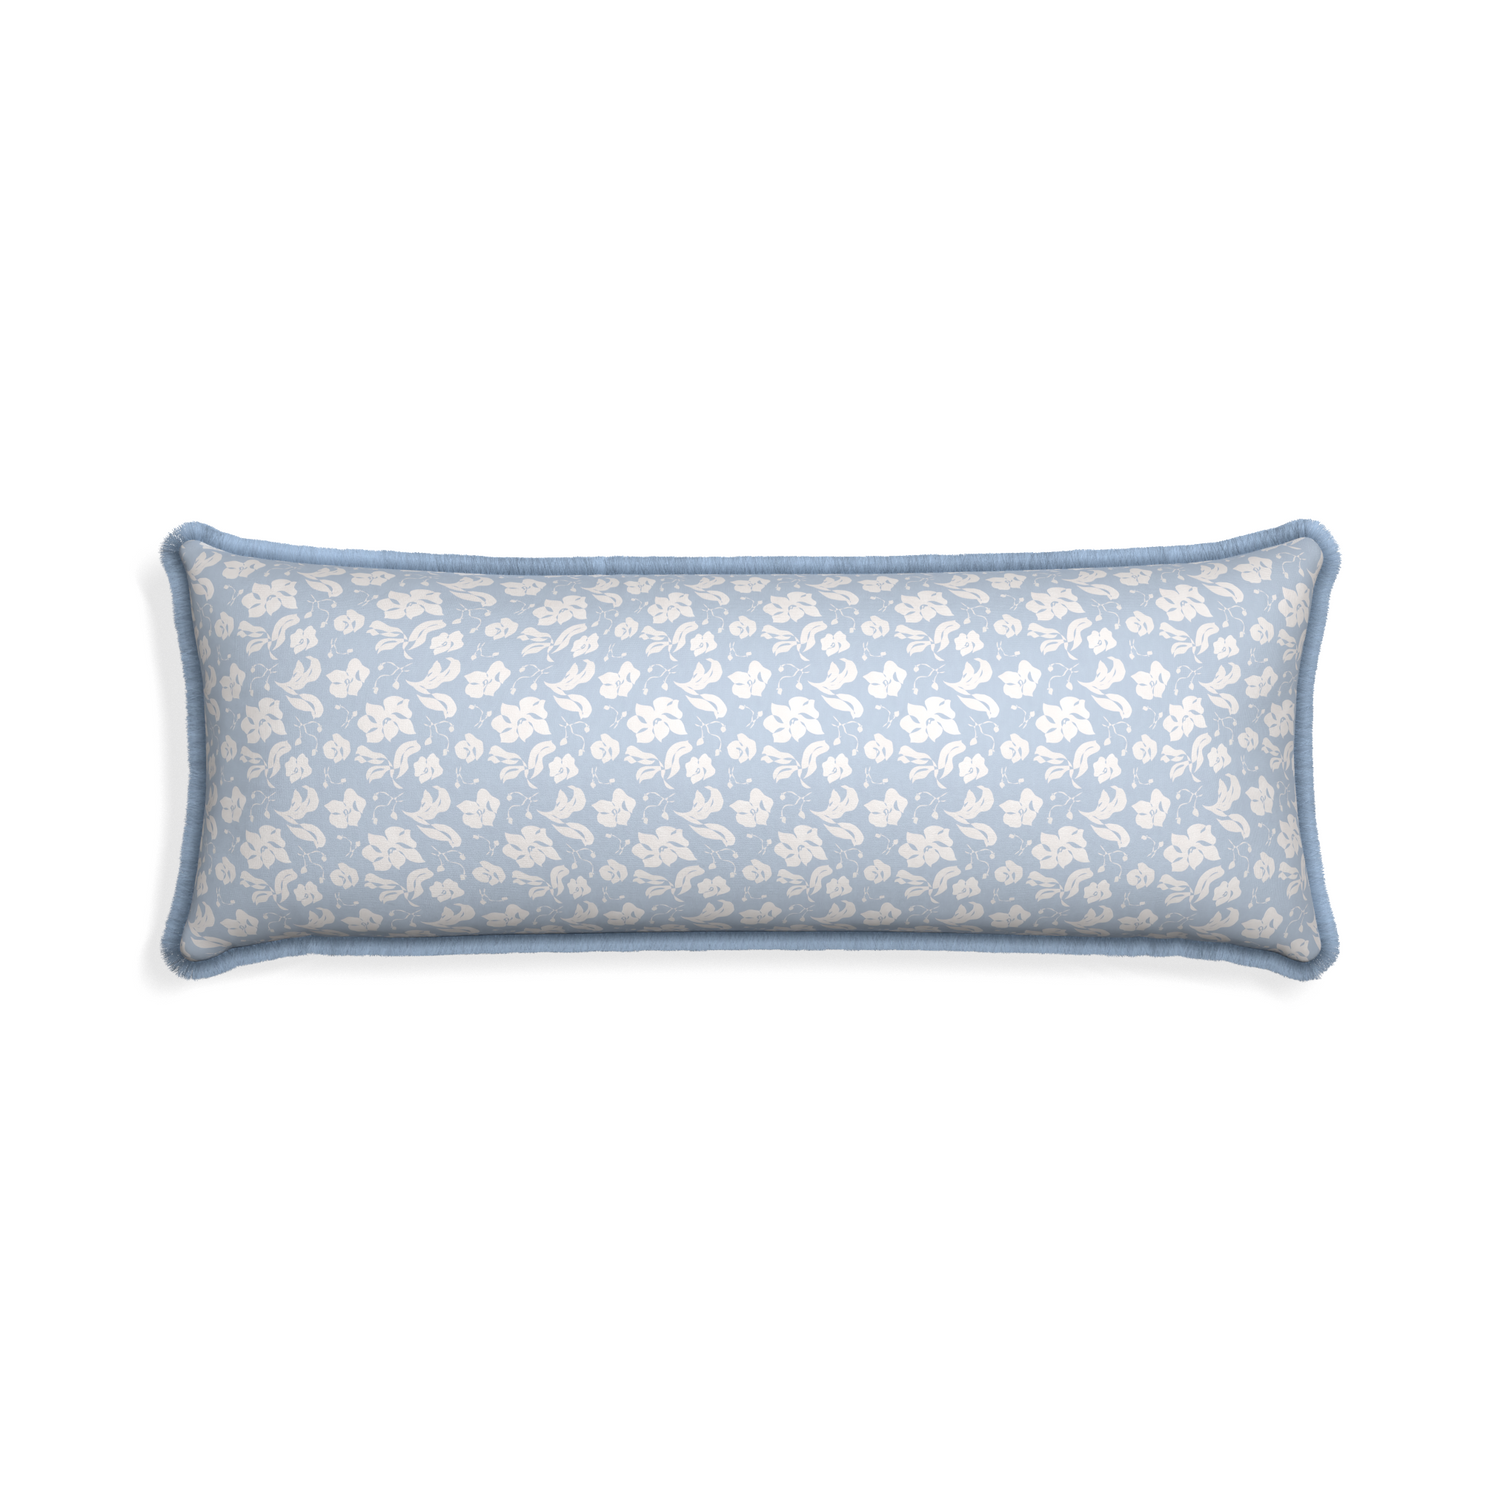 Xl-lumbar georgia custom pillow with sky fringe on white background